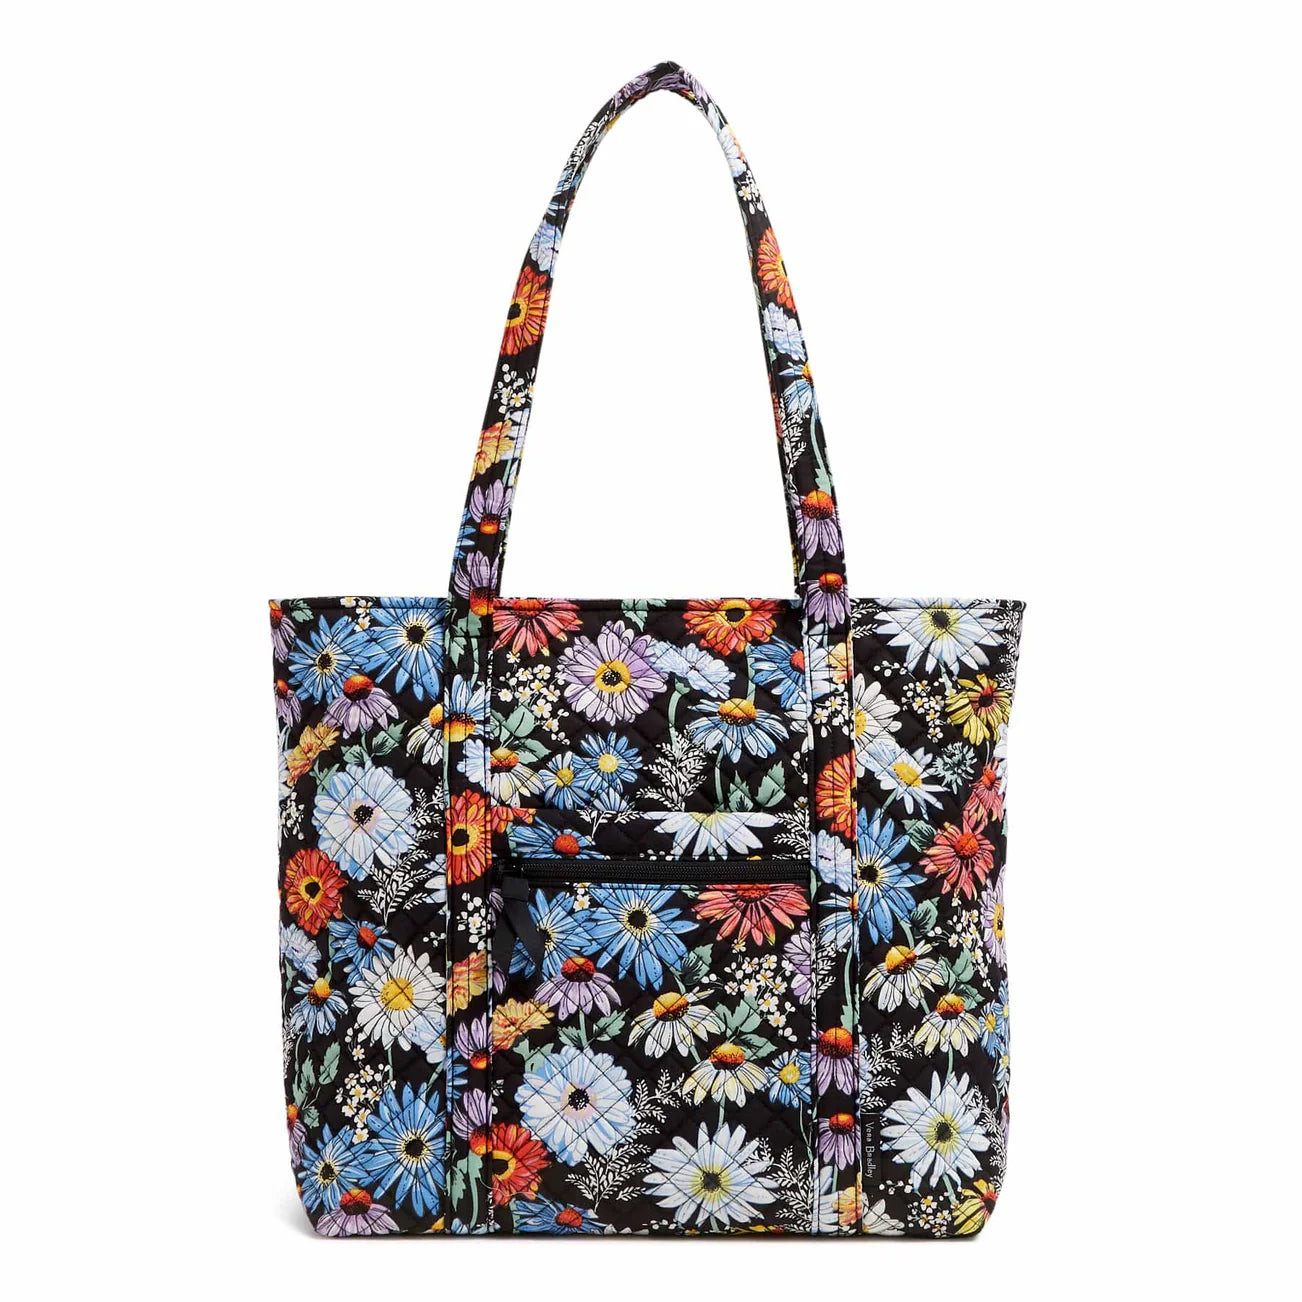 Vera Bradley handbag in Daisies pattern.